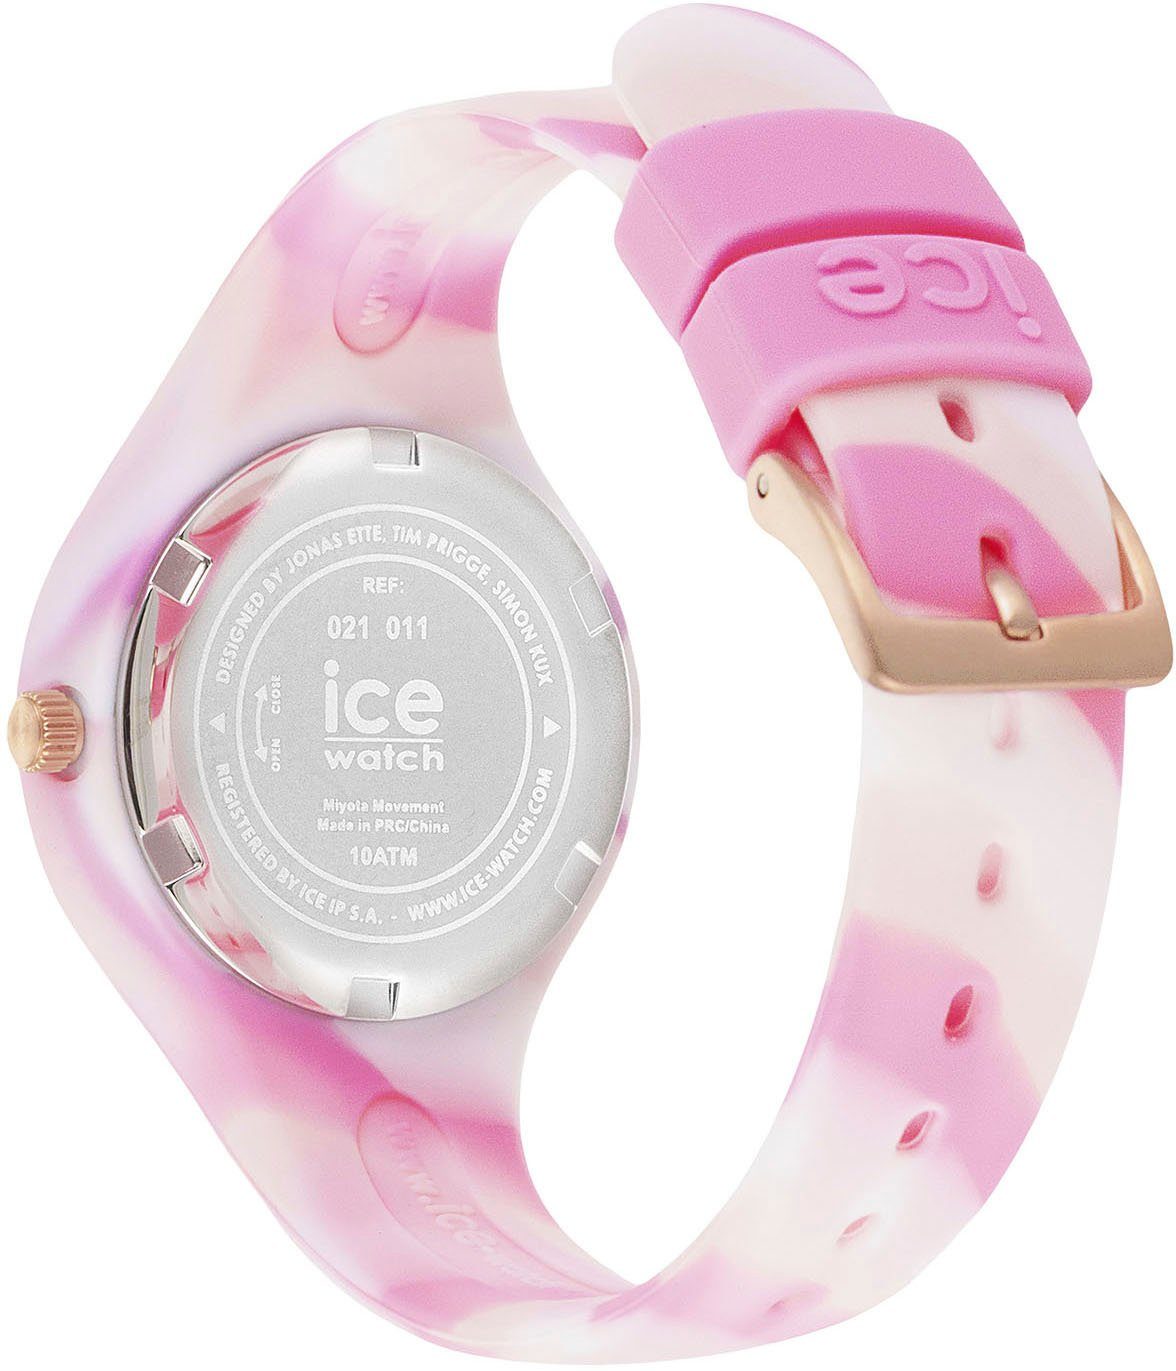 ice-watch Quarzuhr ICE tie and - - dye 3H, Pink Extra-Small - 021011, shades als Geschenk auch ideal